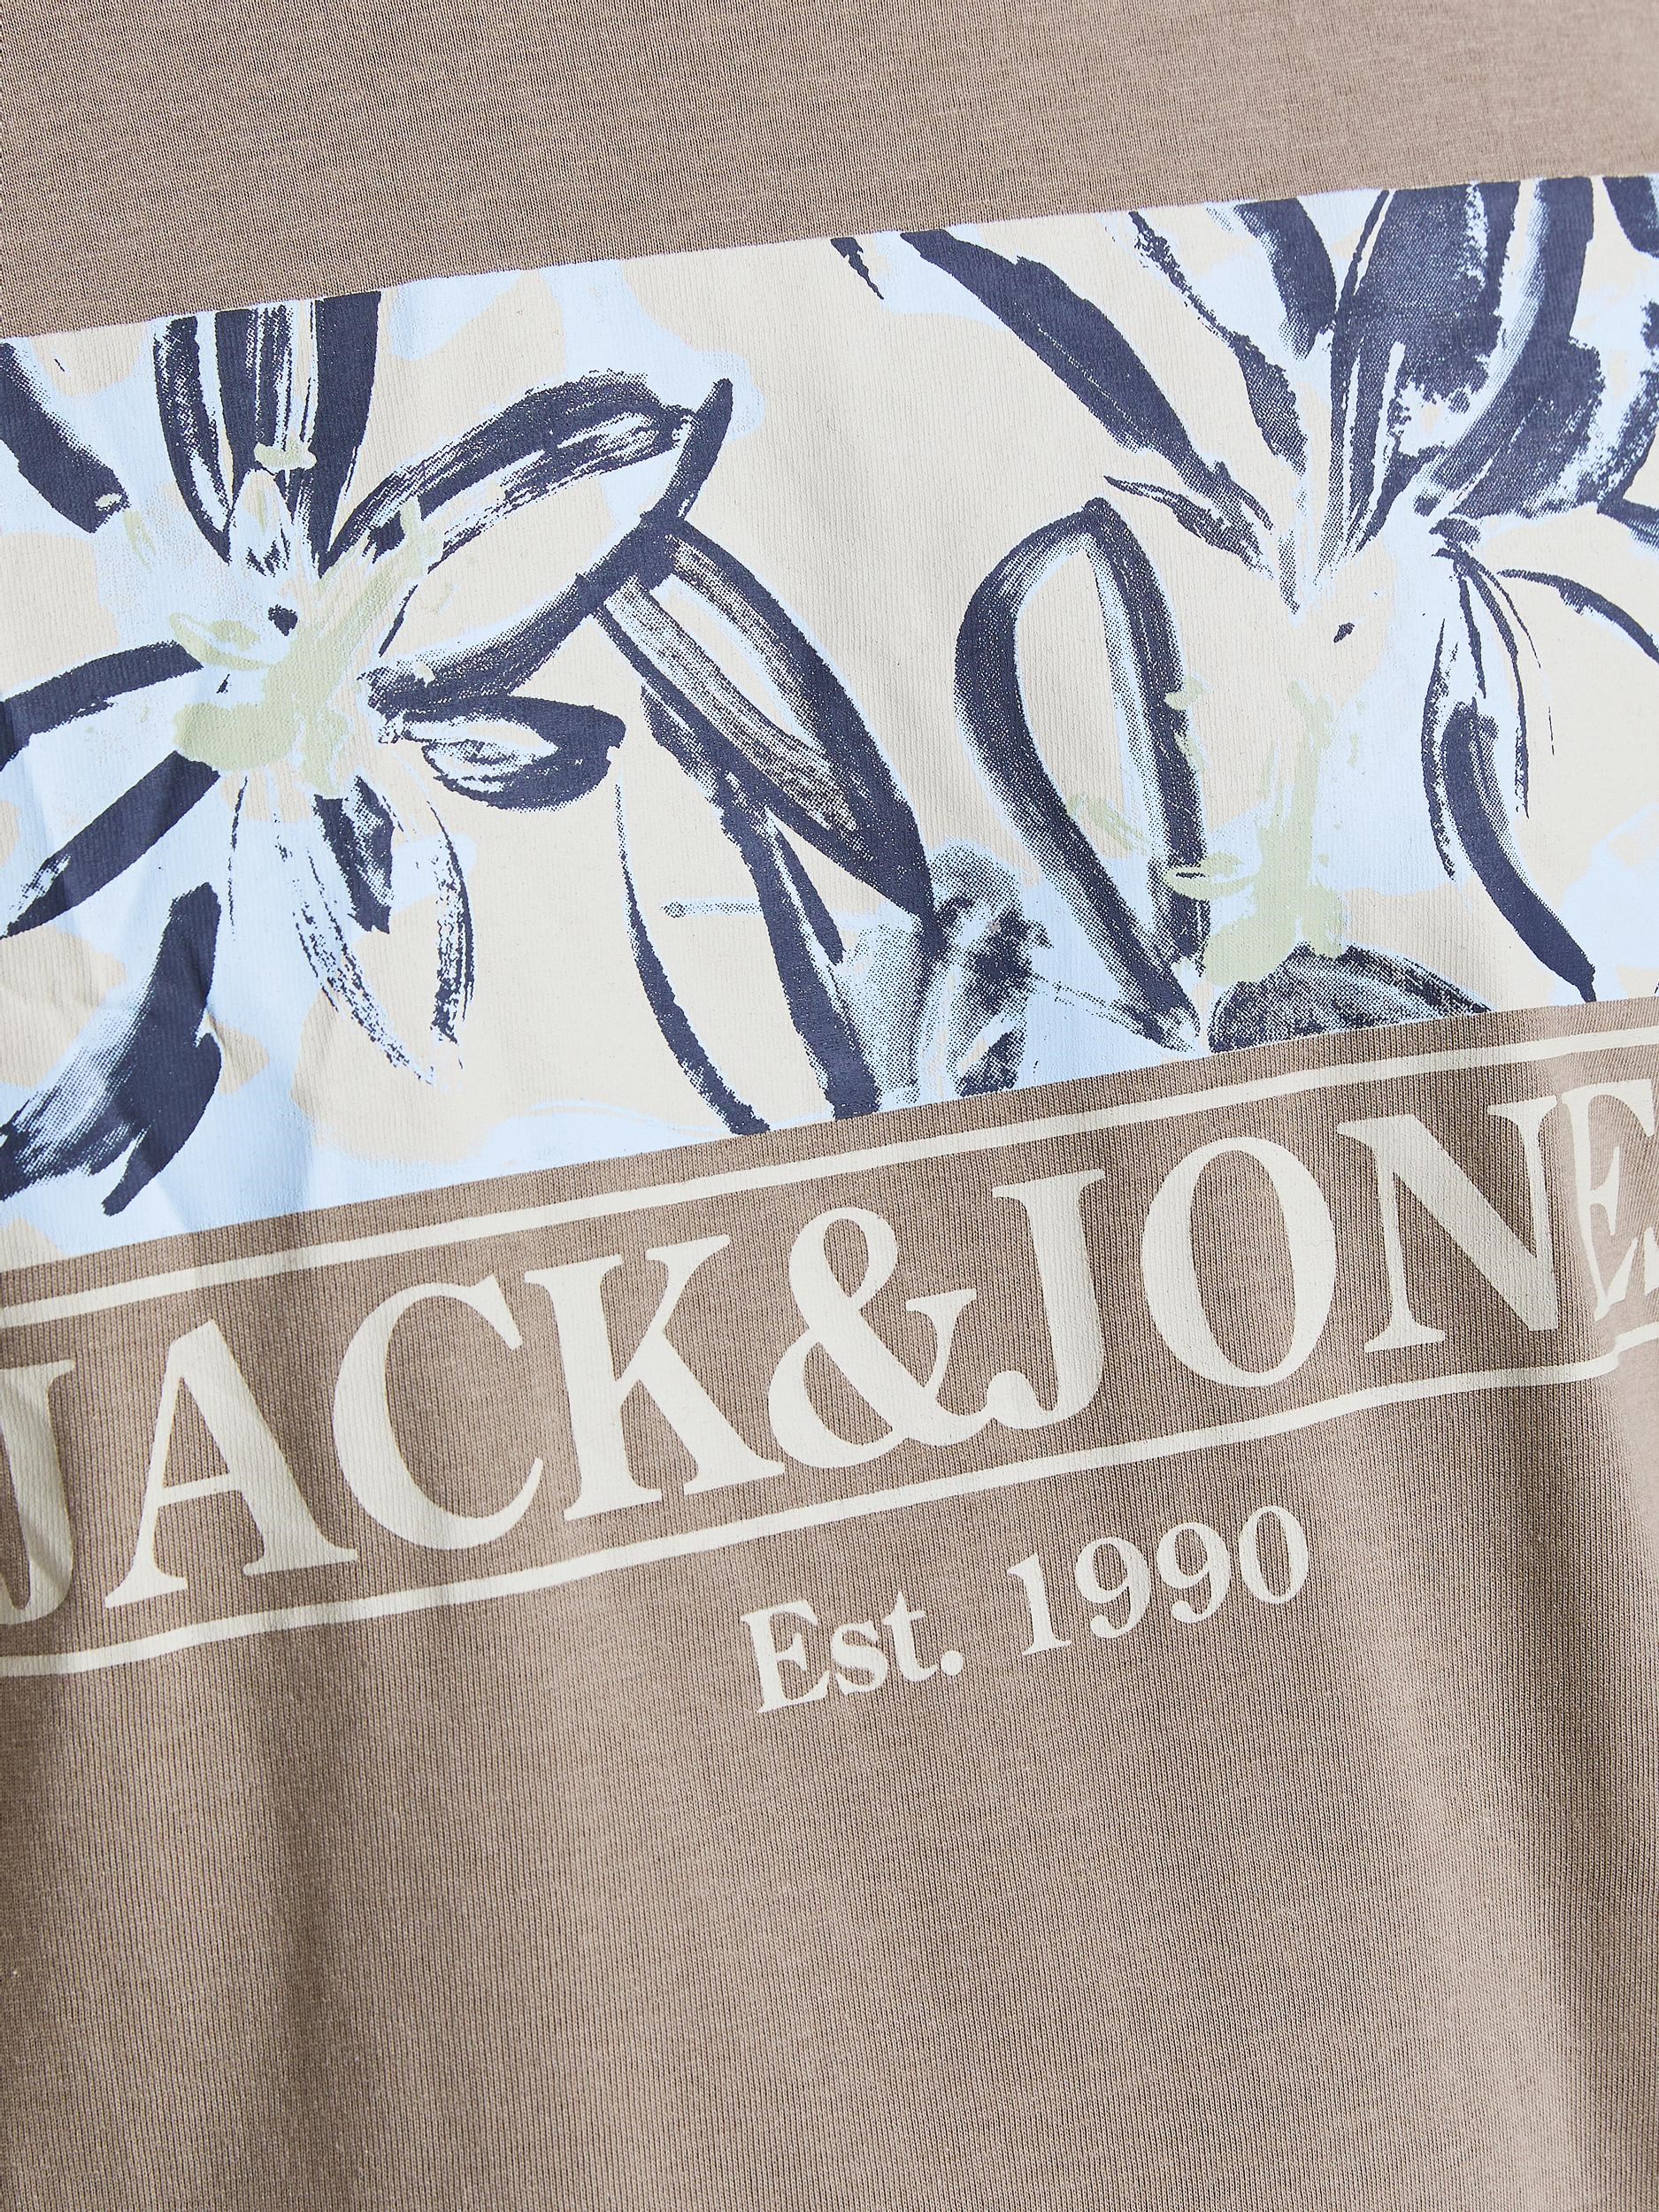 Jack Jones Erkek T-Shirt 12205874 Fungi